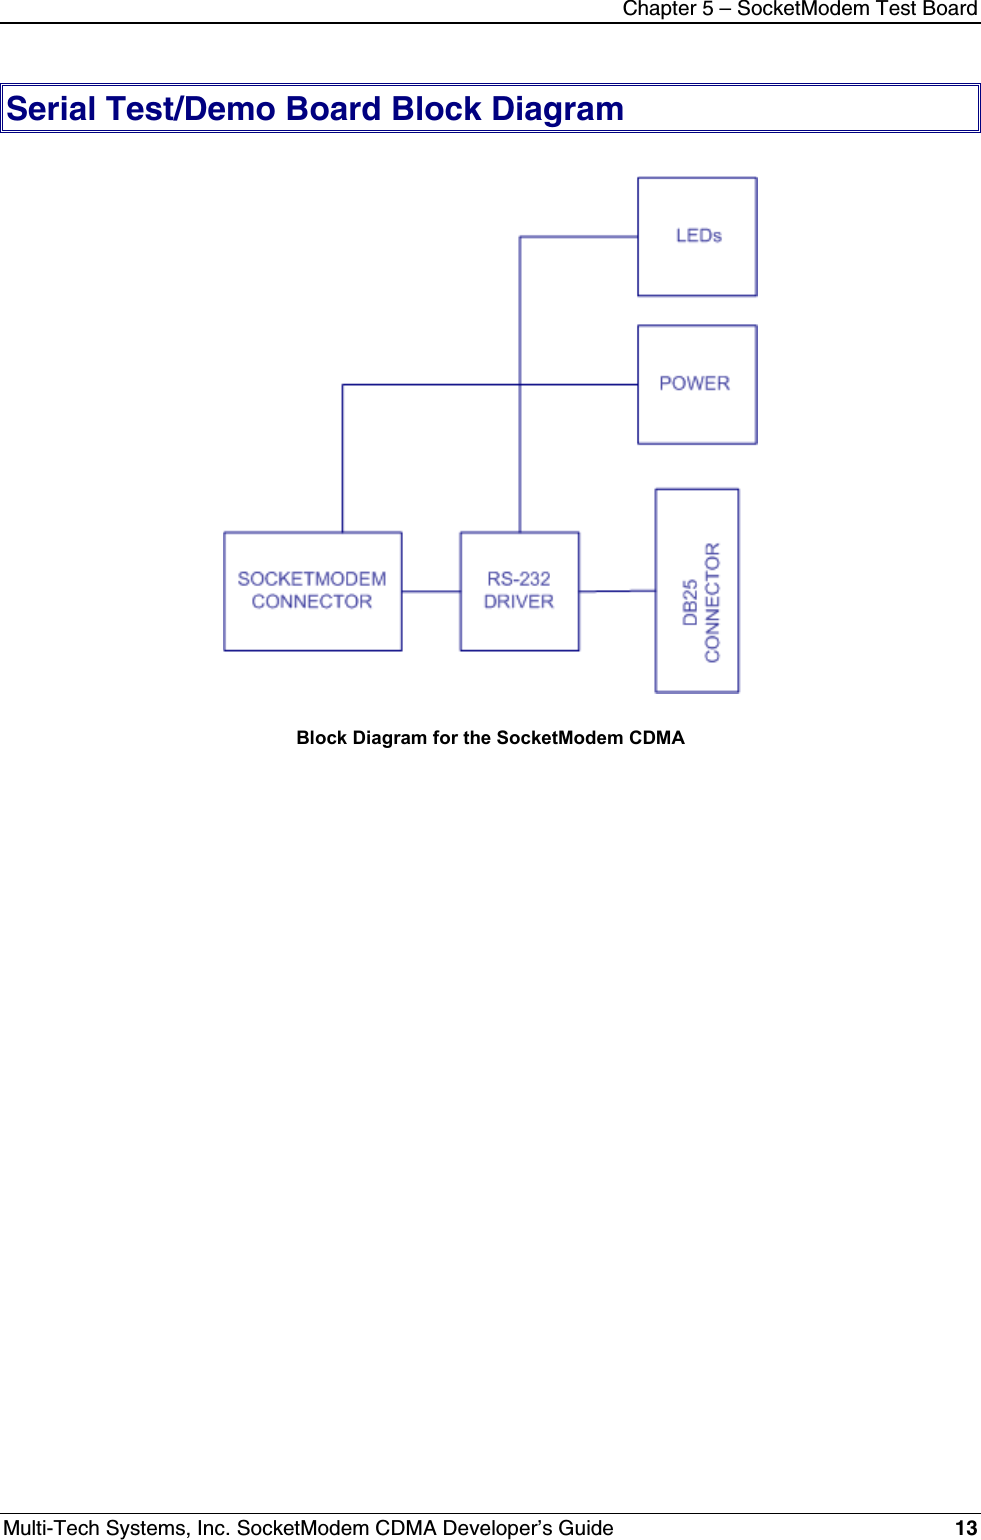 Chapter 5 – SocketModem Test BoardMulti-Tech Systems, Inc. SocketModem CDMA Developer’s Guide 13Serial Test/Demo Board Block DiagramBlock Diagram for the SocketModem CDMA